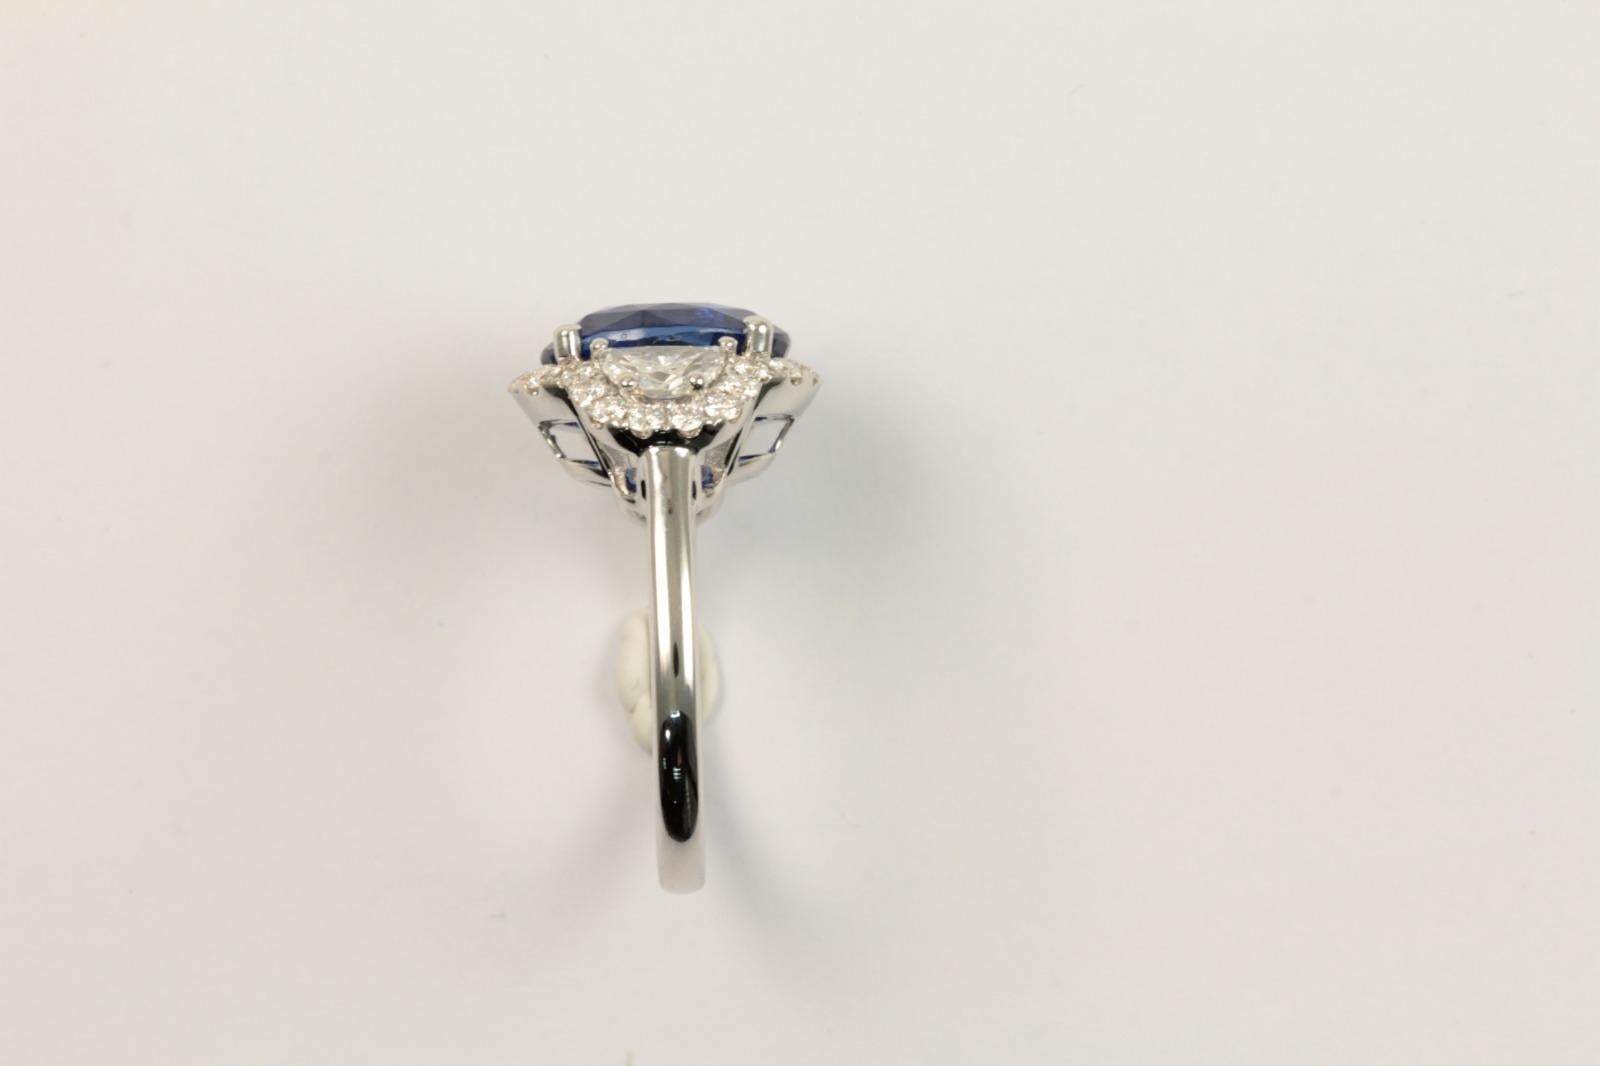 vivid royal blue sapphire